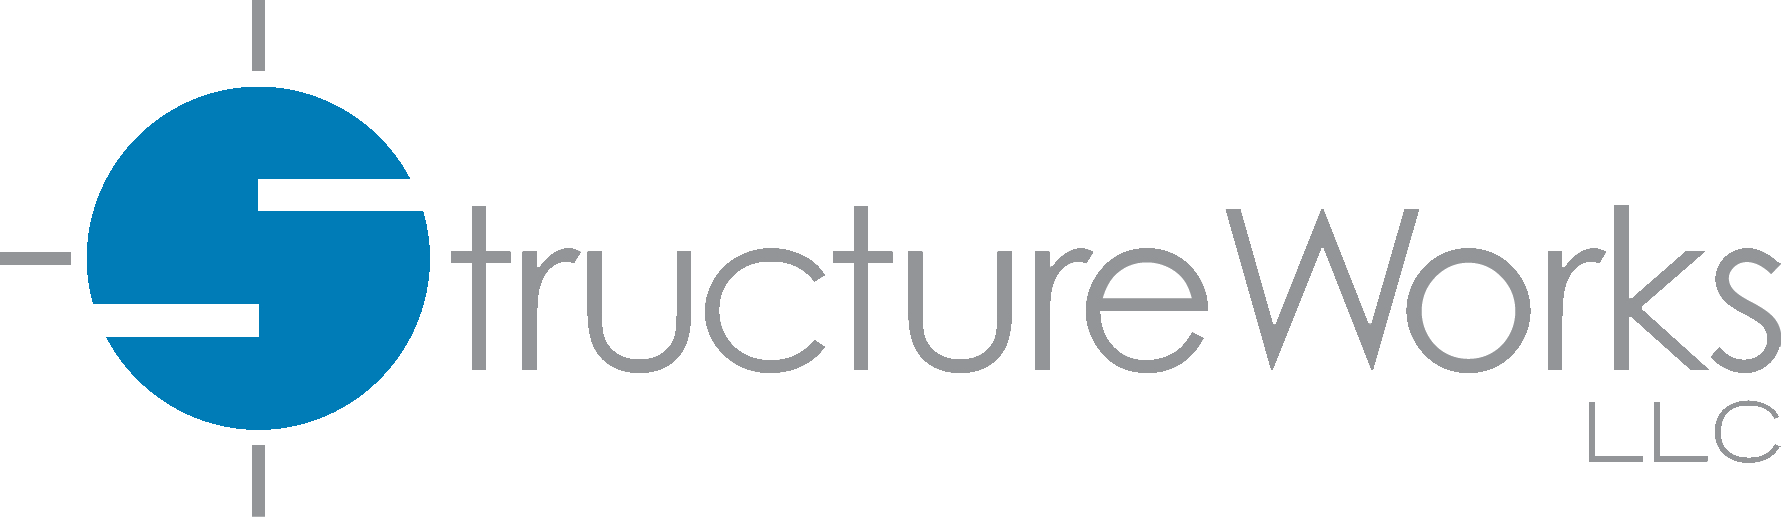 BIM Software Logo - StructureWorks | BIM Software Driving the Precast Industry